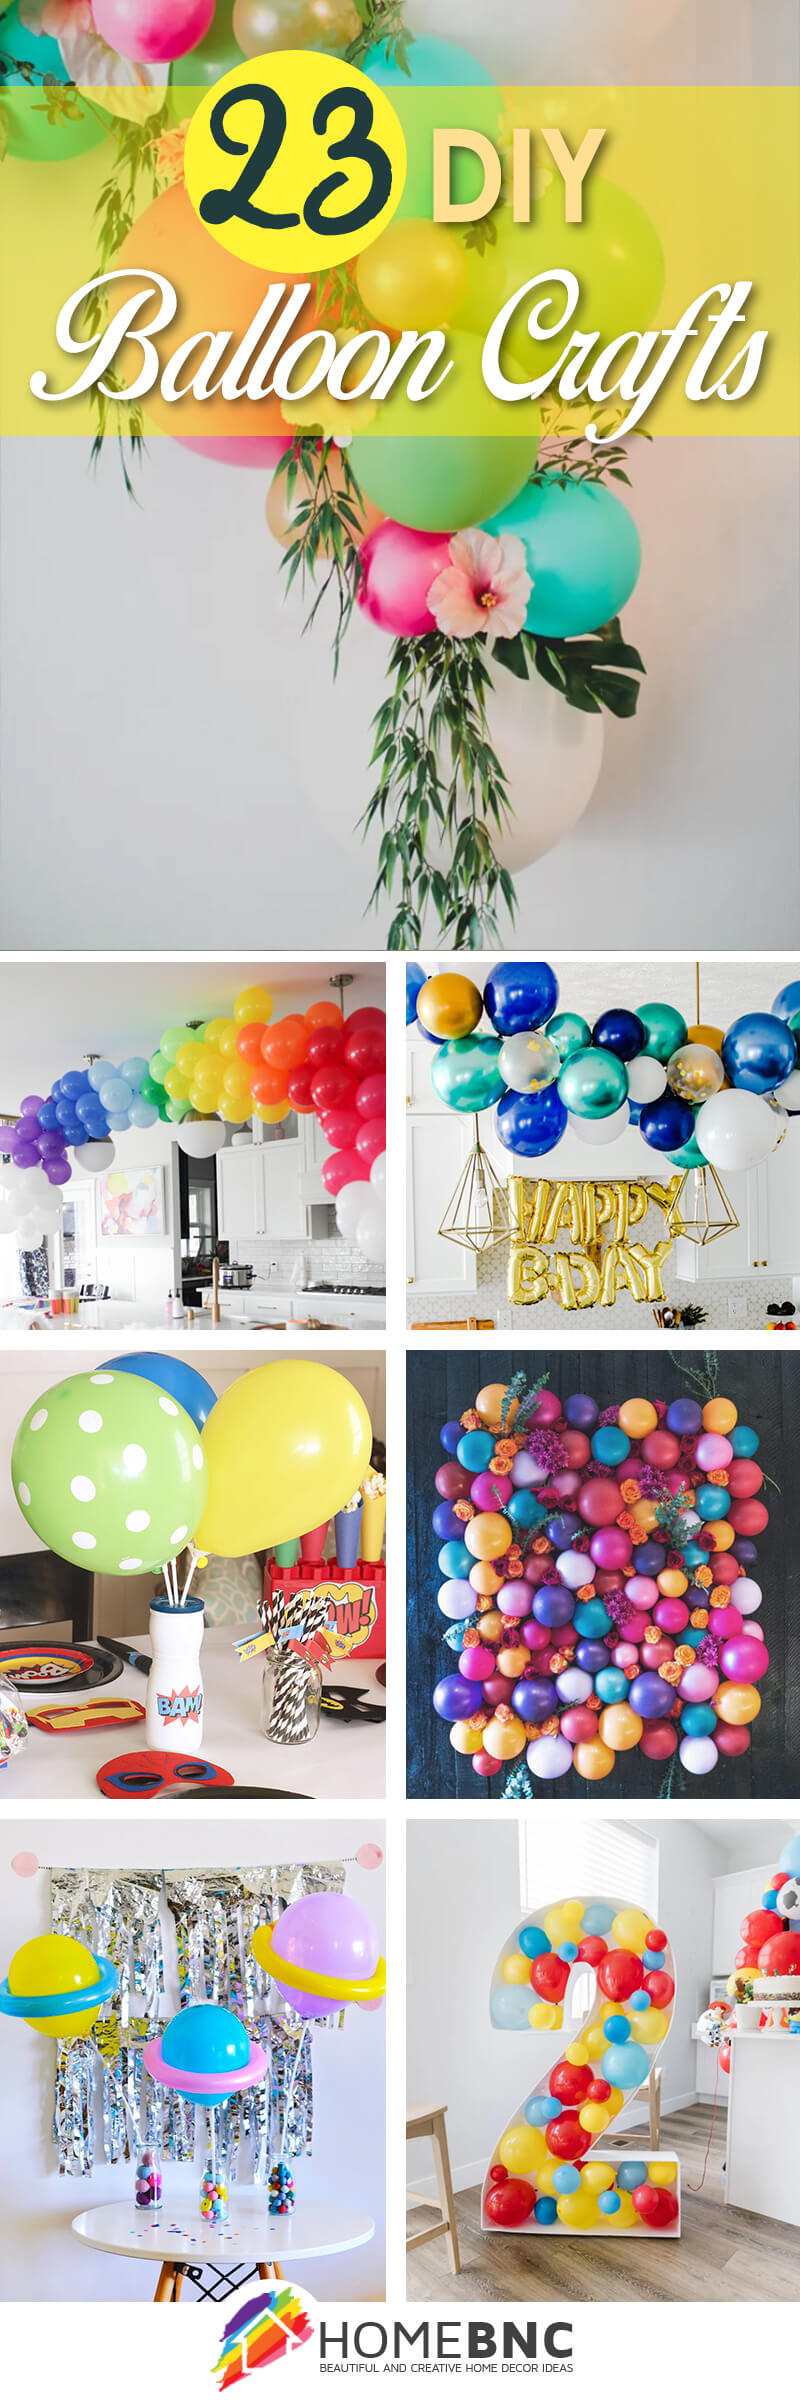 21 Creative DIY Balloon Decoration Ideas for Your Next Party